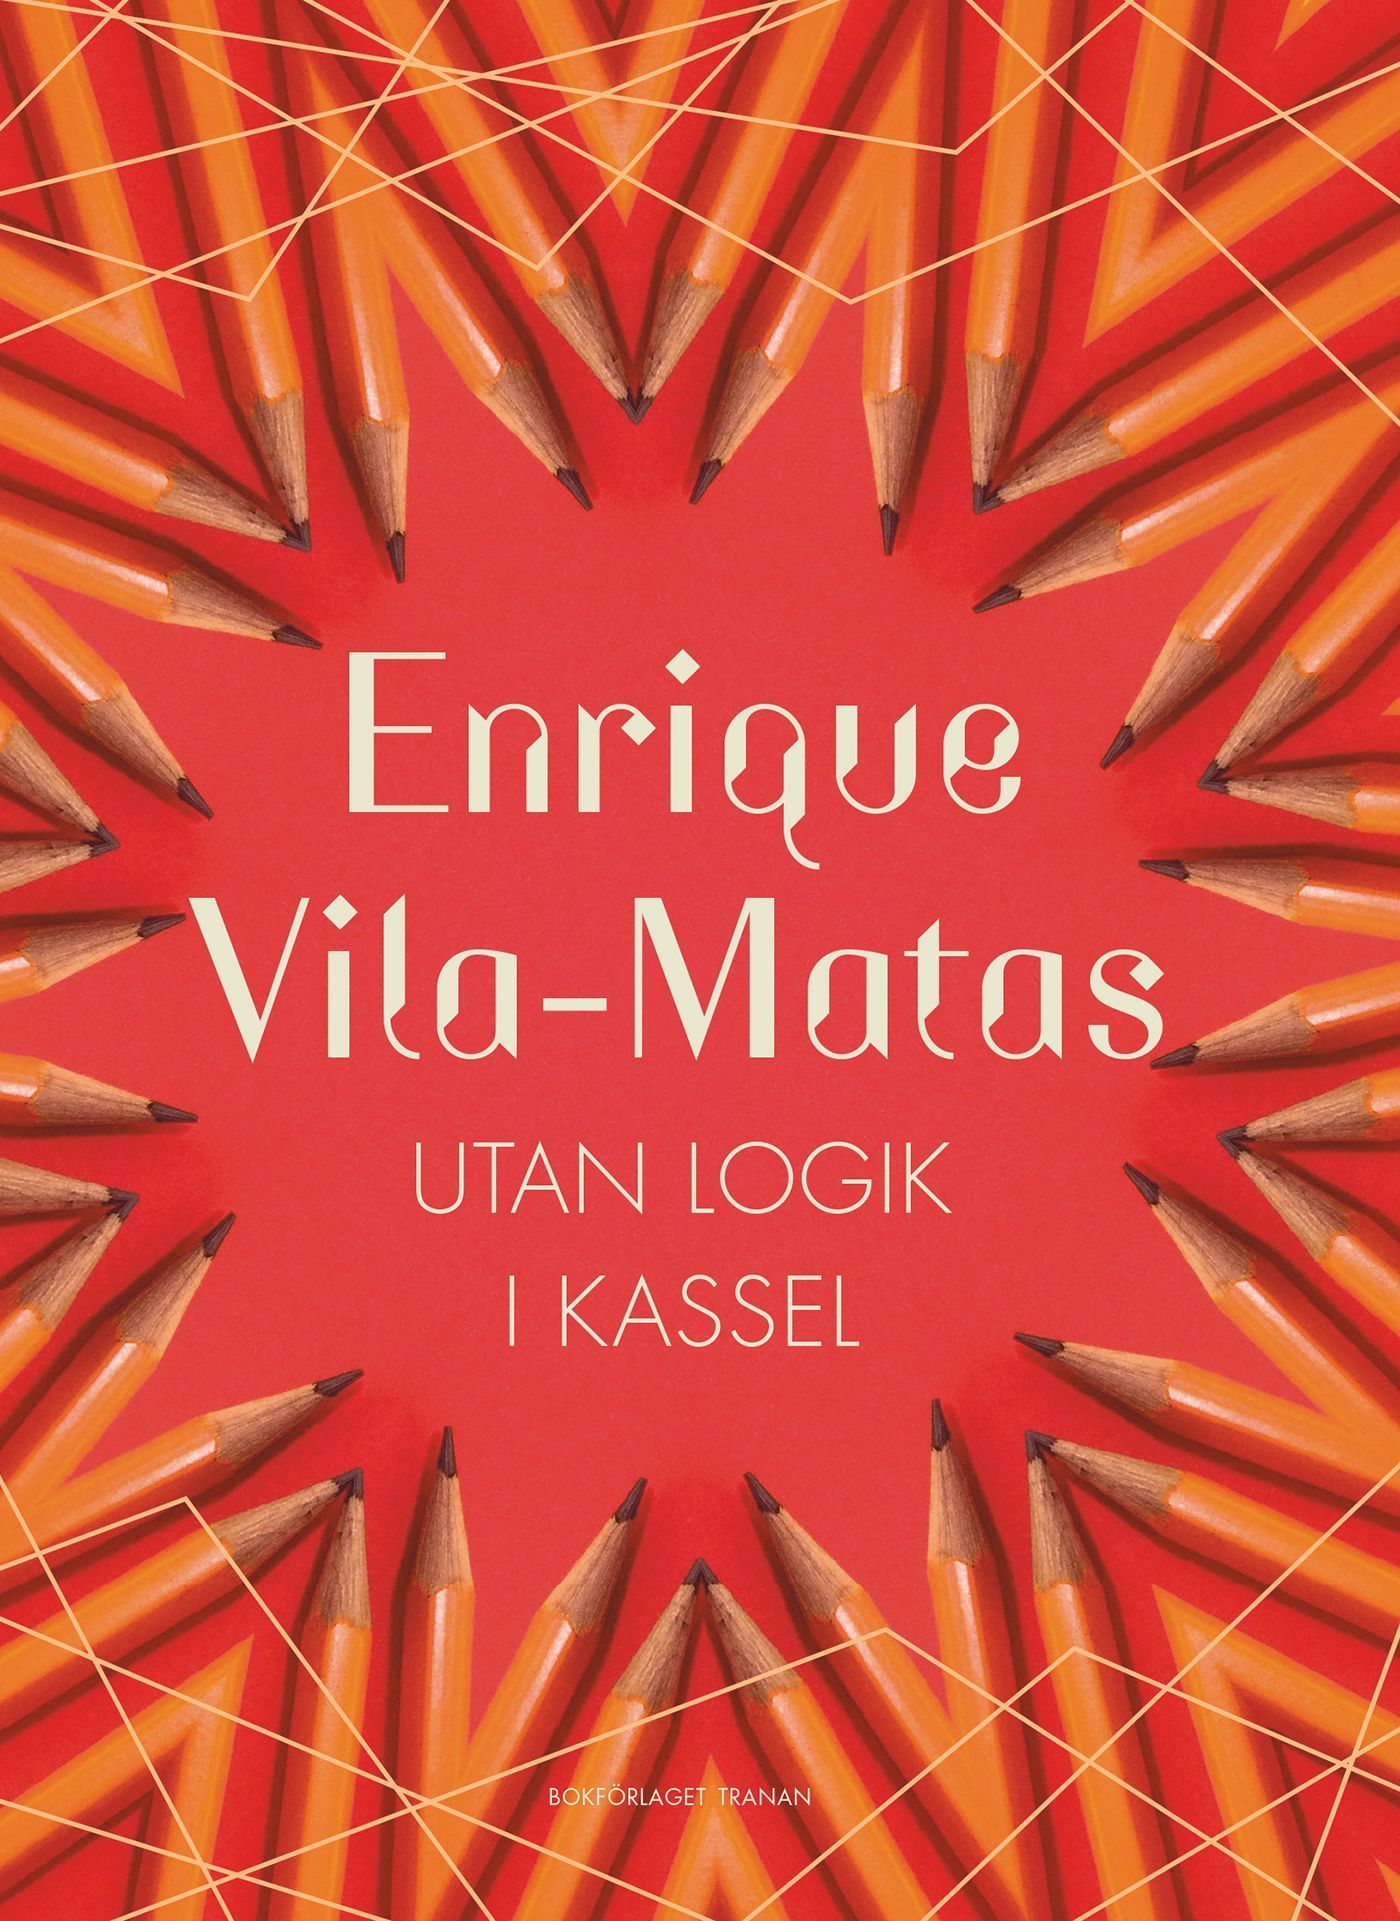 Utan logik i Kassel, e-bog af Enrique Vila-Matas